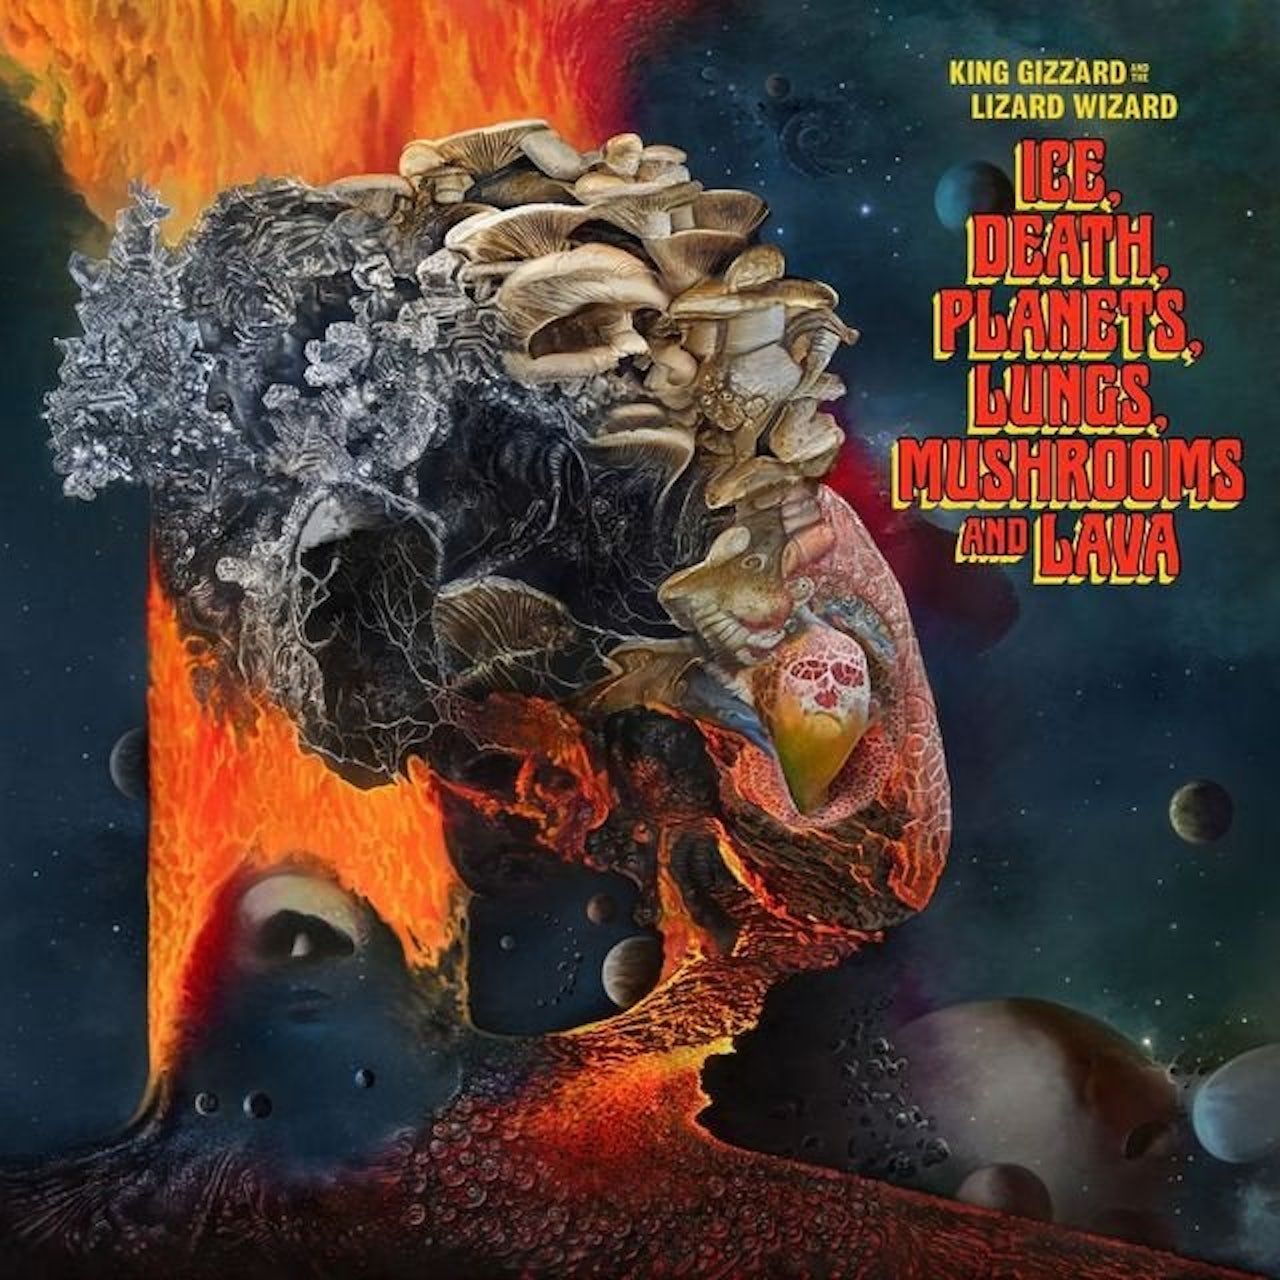 0842812170164, Виниловая пластинка King Gizzard & The Lizard Wizard, Ice, Death, Planets, Lungs, Mushroom And Lava